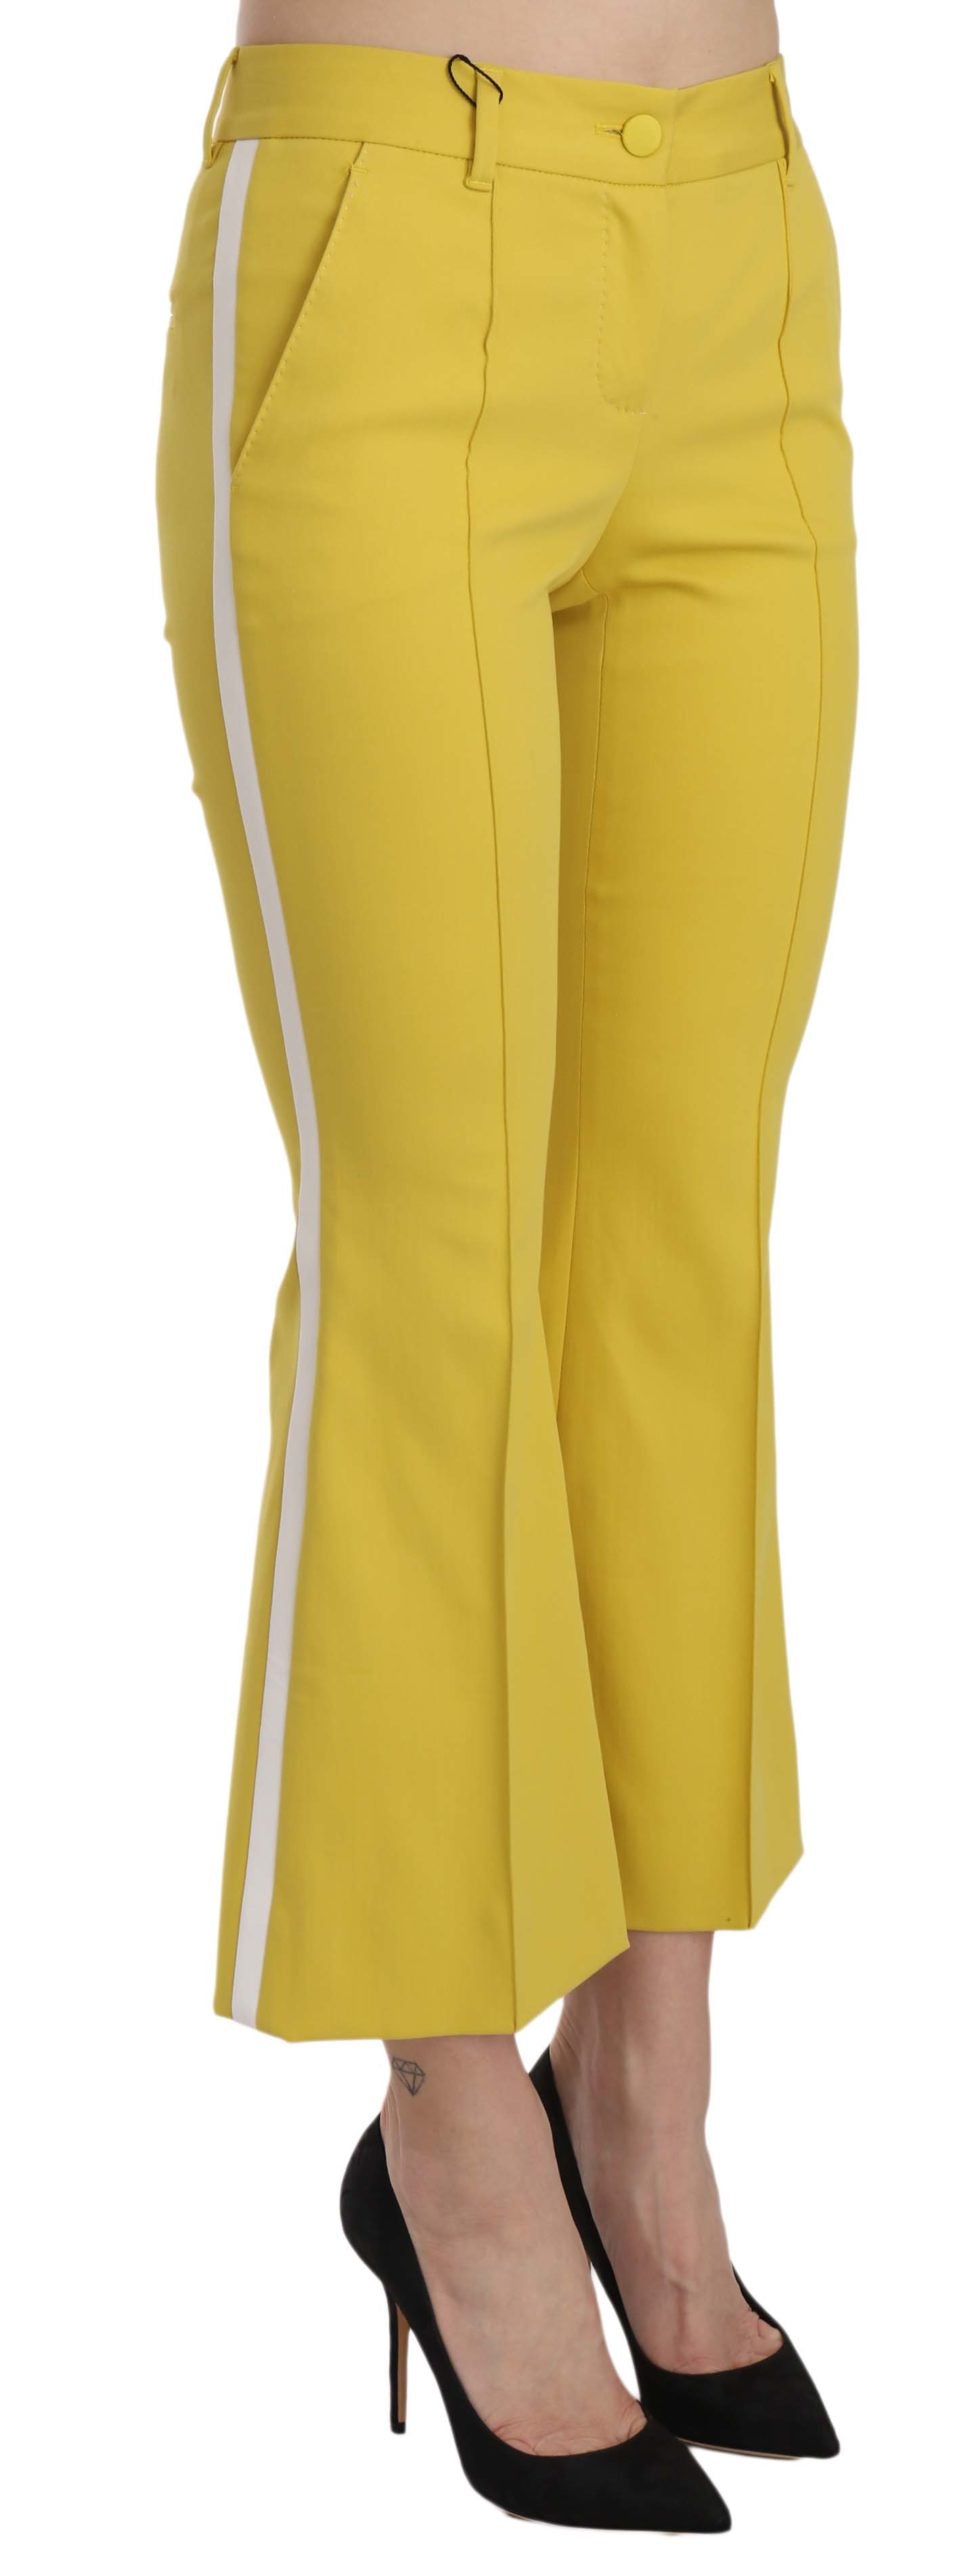 Fashionsarah.com Fashionsarah.com Dolce & Gabbana Chic Yellow Flare Pants for Elegant Evenings